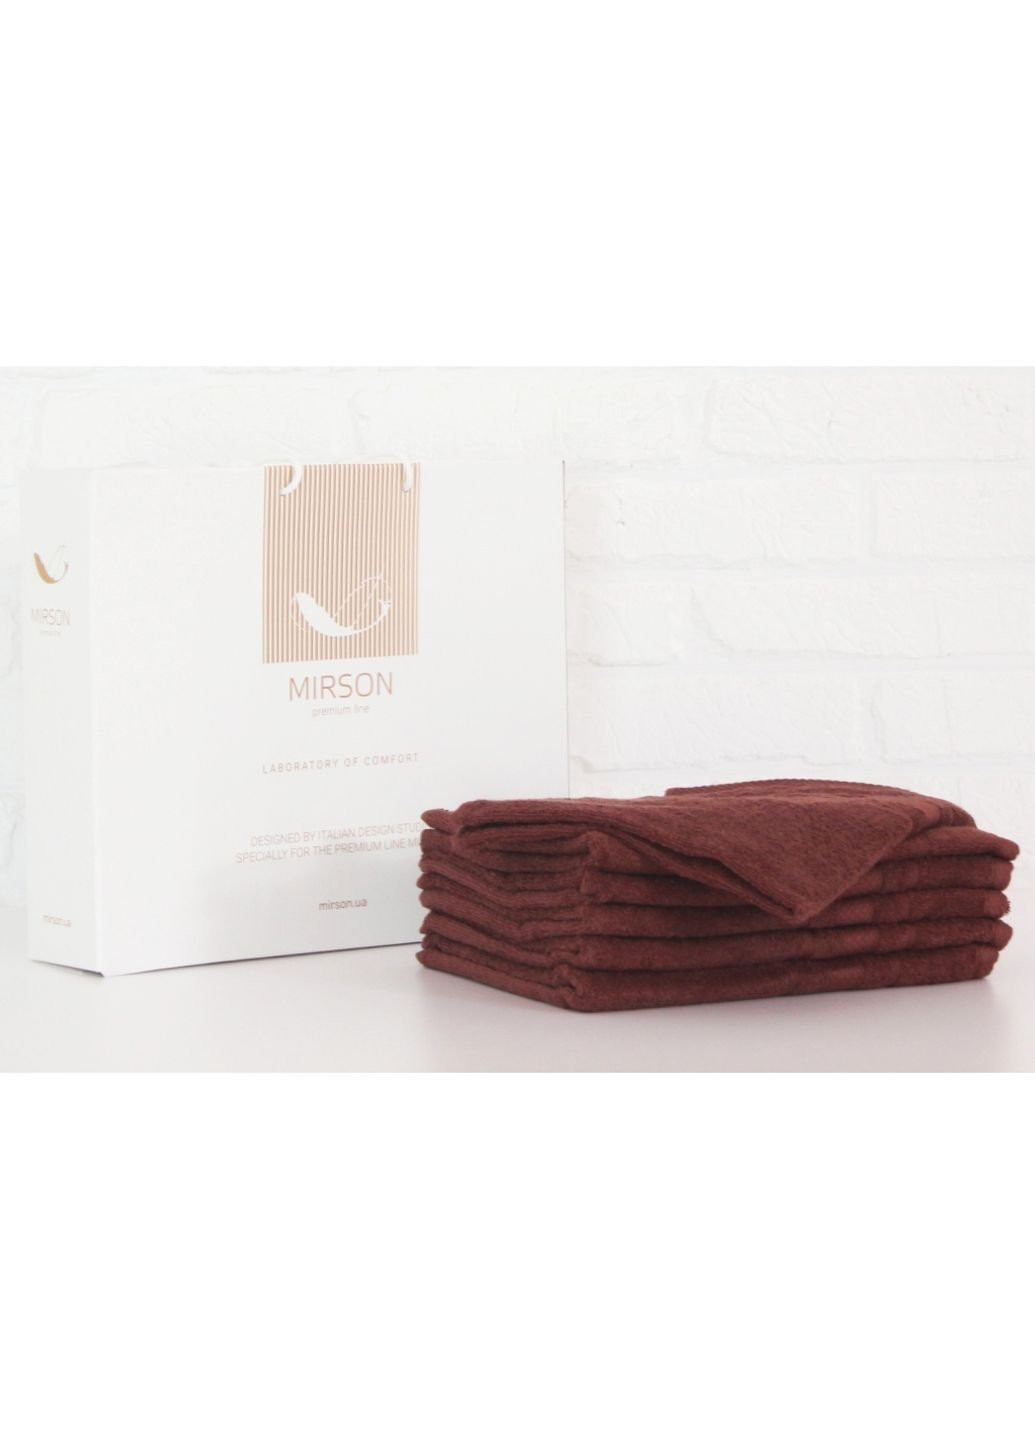 Mirson полотенце набор банный №5071 elite softness brown 50х90 6 шт (2200003523959) коричневый производство - Украина